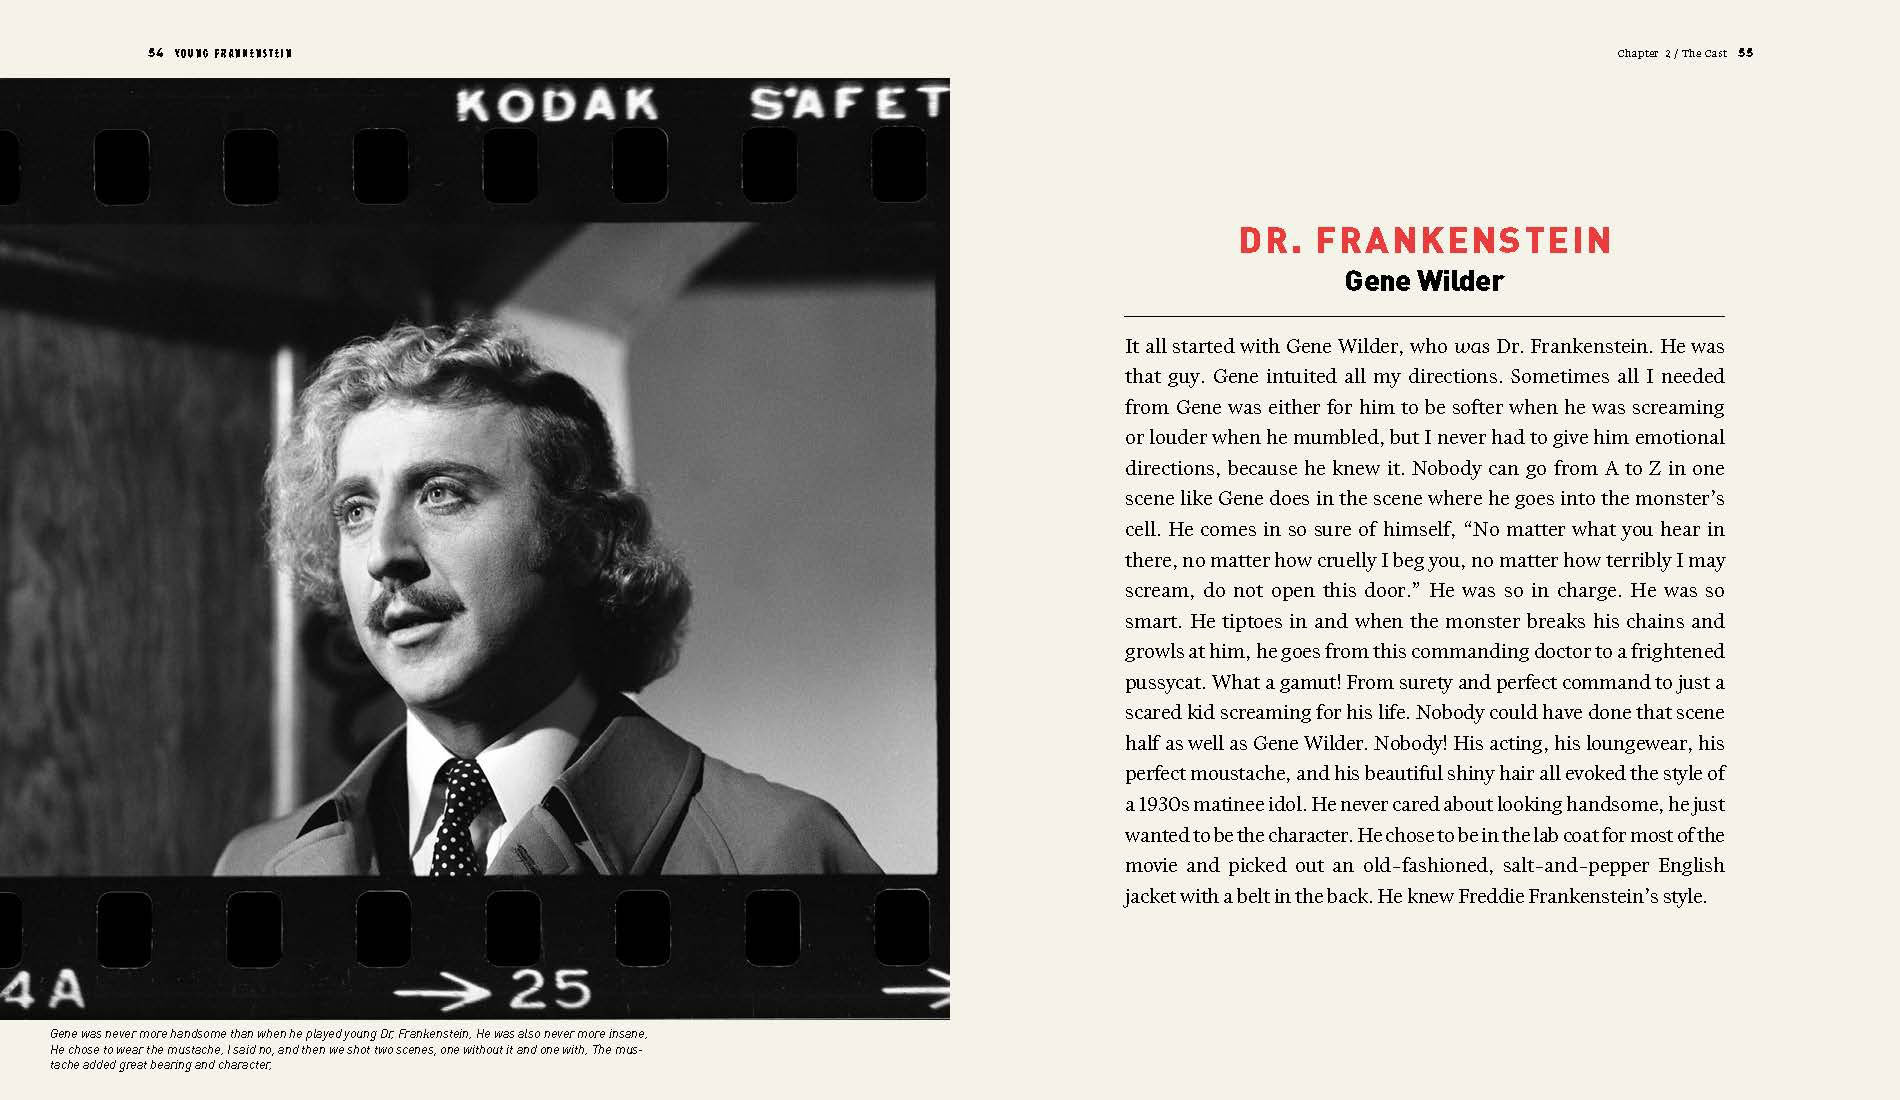 Young Frankenstein: The Story of the Making of the Film de Mel Brooks (Barnes & Noble) - le livre du film Frankenstein Junior (Mel Brooks, 1974)